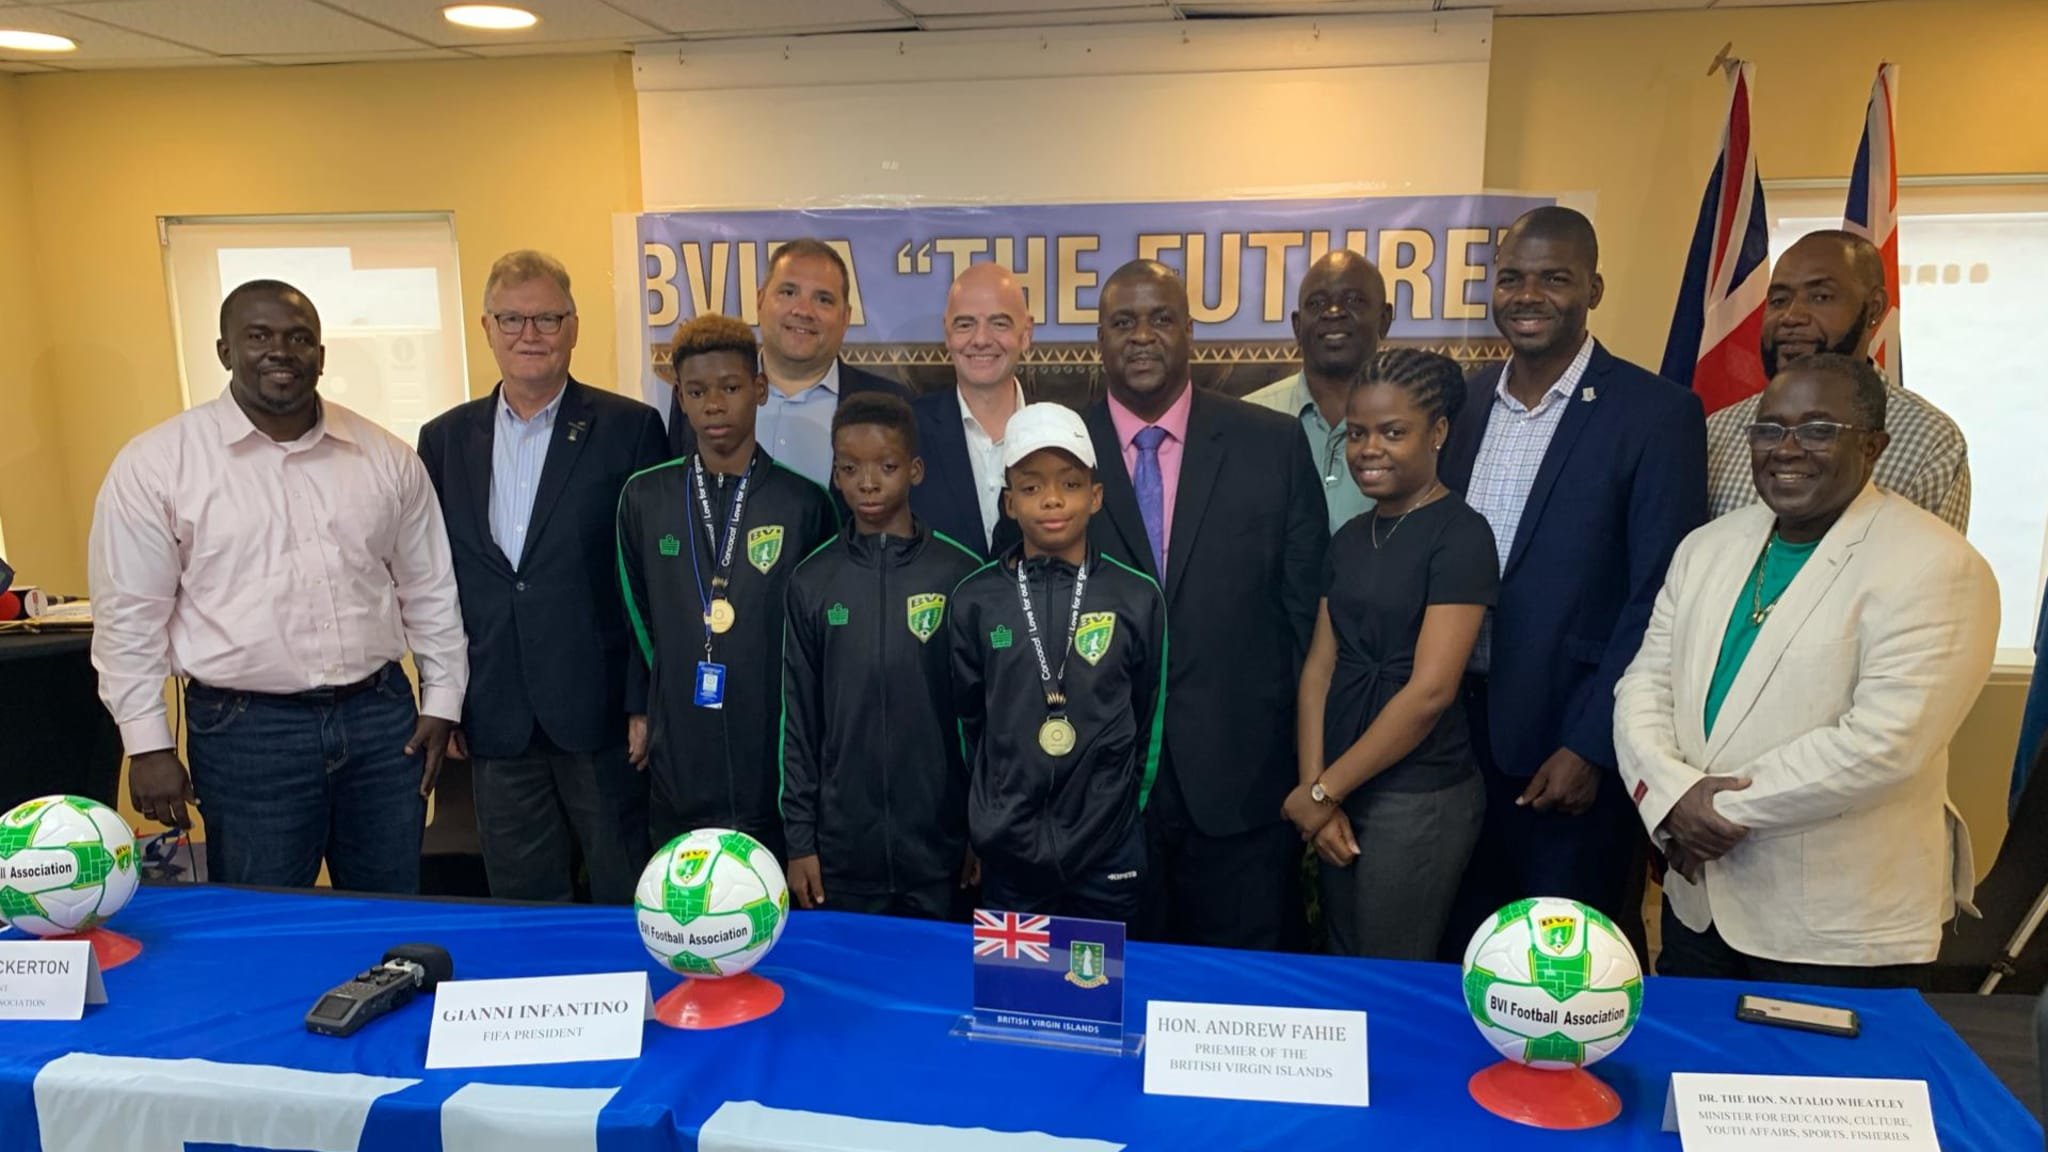 FIFA President Infantino arrives in the British Virgin Islands